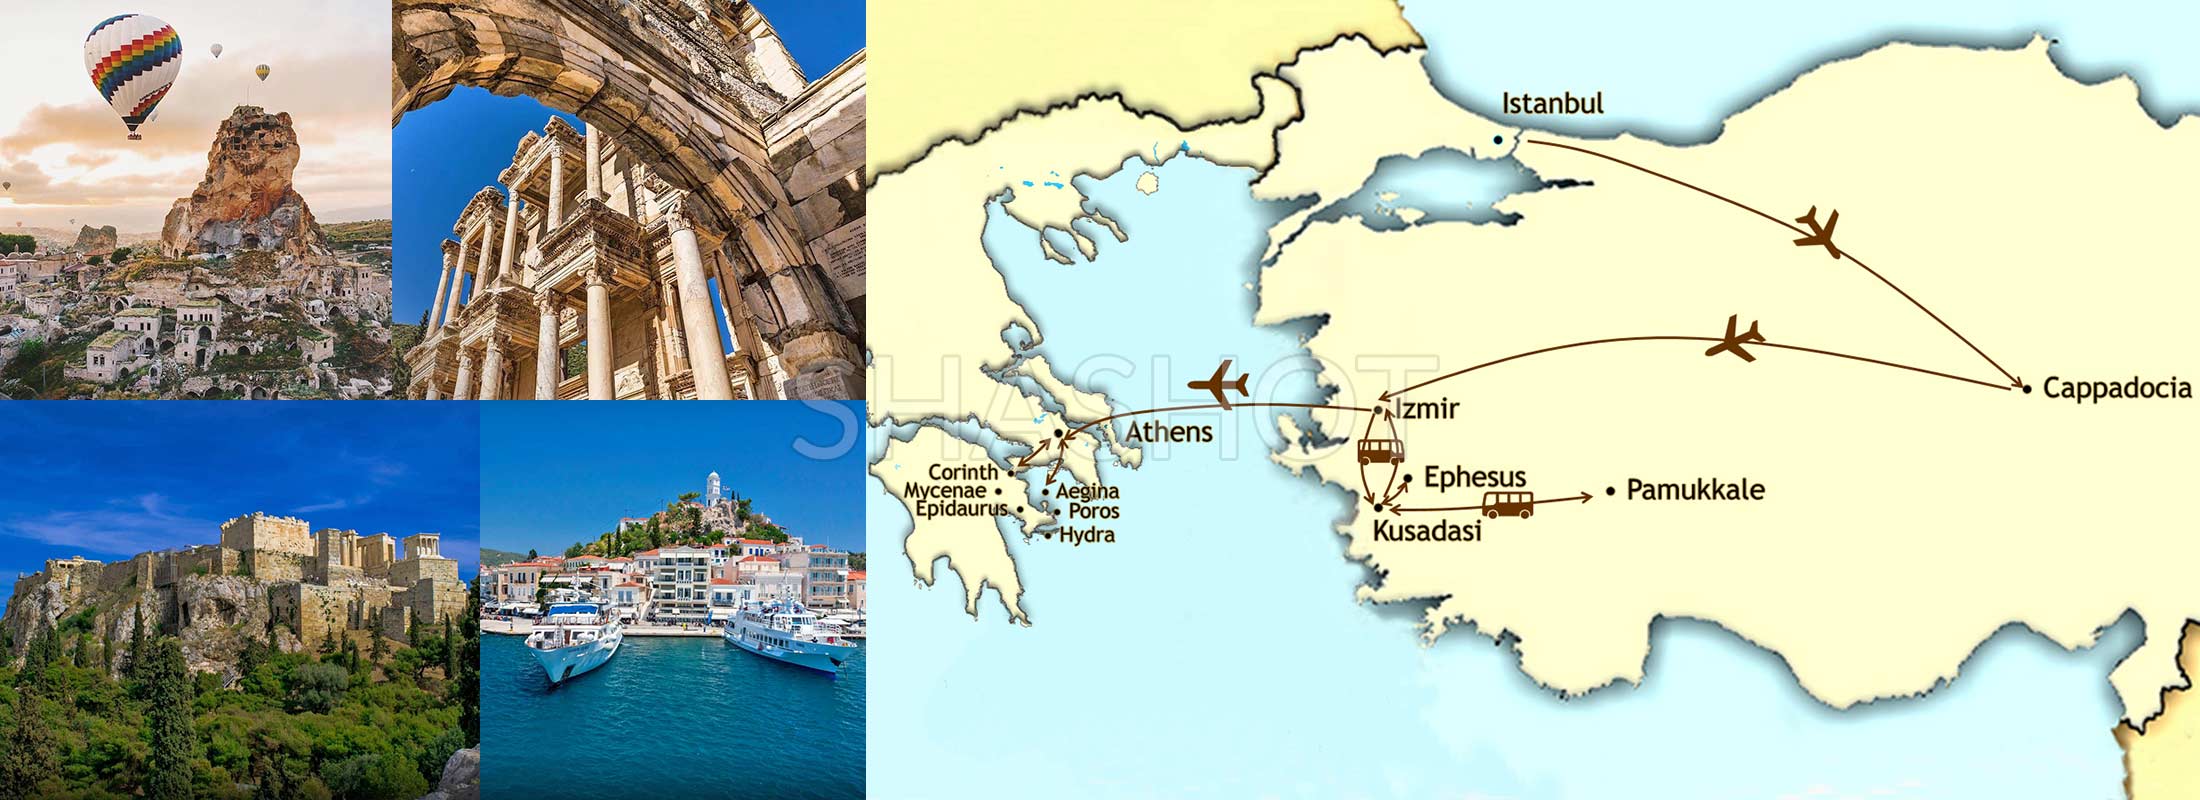 10-DAYS-TURKEY-GREECE-PACKAGE-TOUR-ISTANBUL-CAPPADOCIA-EPHESUS-PAMUKKALE-ATHENS-AEGINA-HYDRA-POROS-CORINTO-map